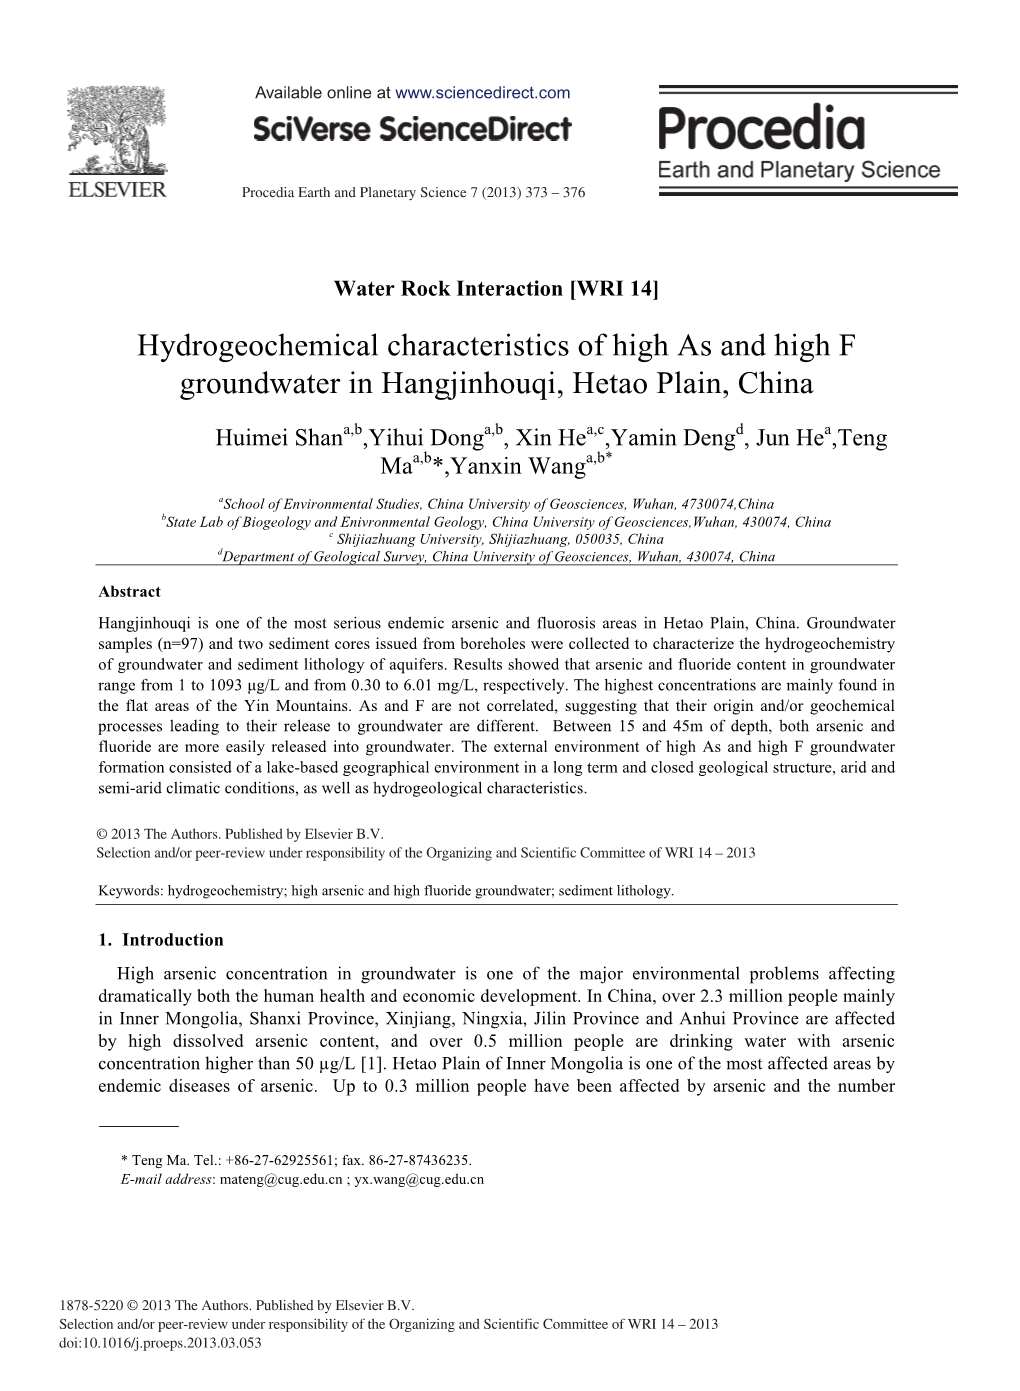 Hydrogeochemical Characteristics of High As and High F Groundwater in Hangjinhouqi, Hetao Plain, China